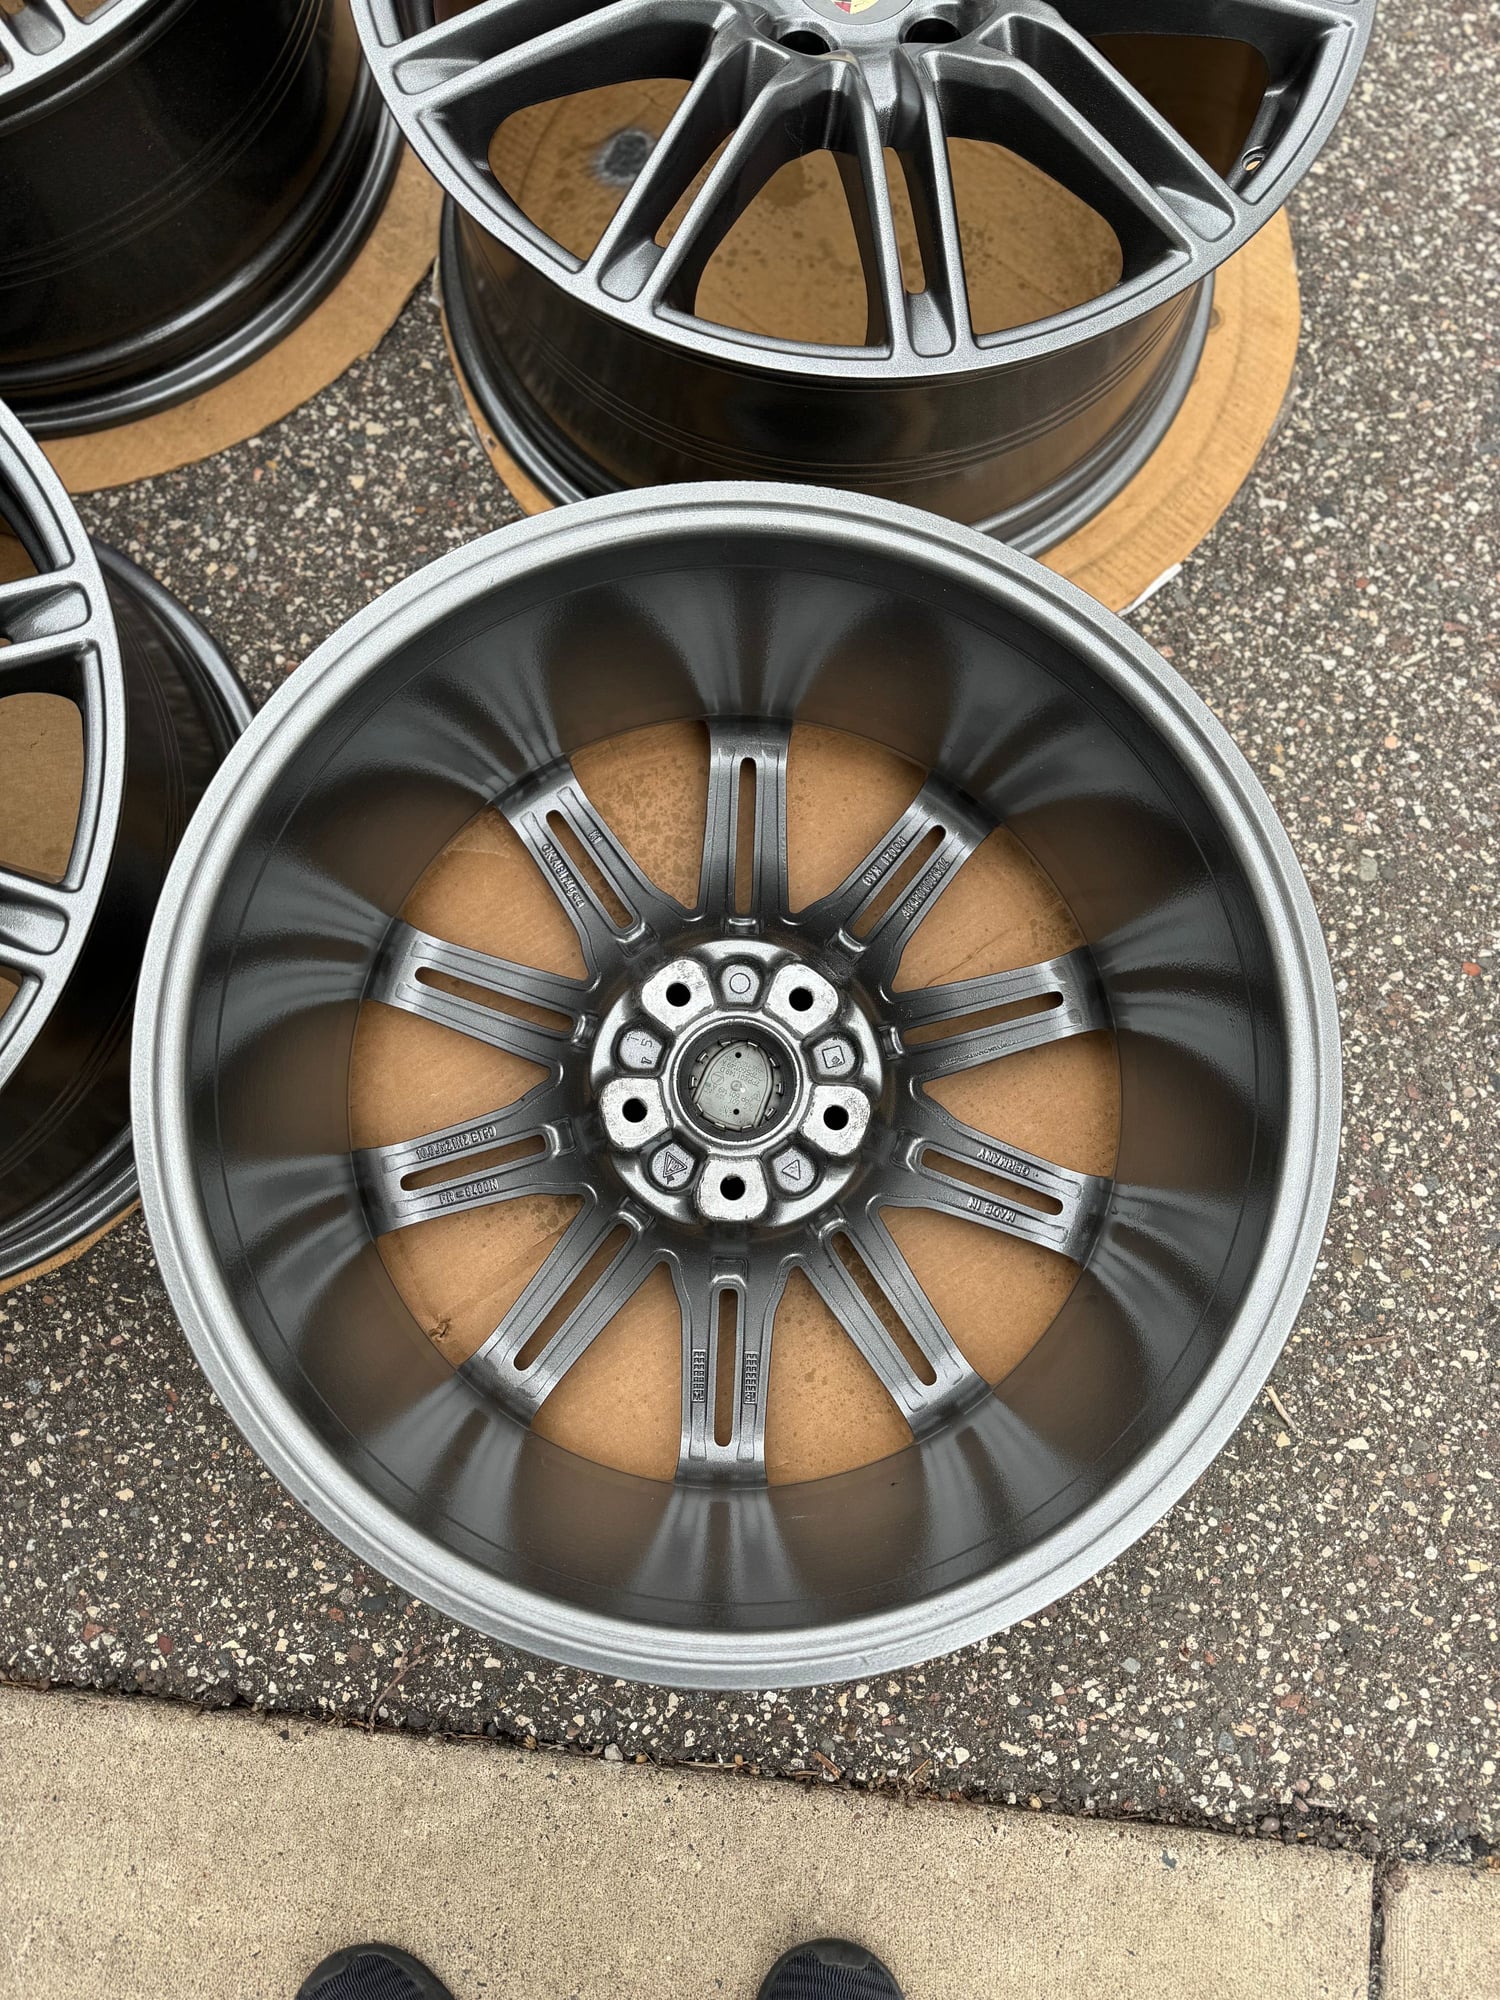 2019 Porsche GT3 - 21" OEM 958 Porsche Cayenne Sport Edition Wheels - Like New - 9Y0 958 957 955 - Accessories - $3,400 - Plymouth, MN 55447, United States